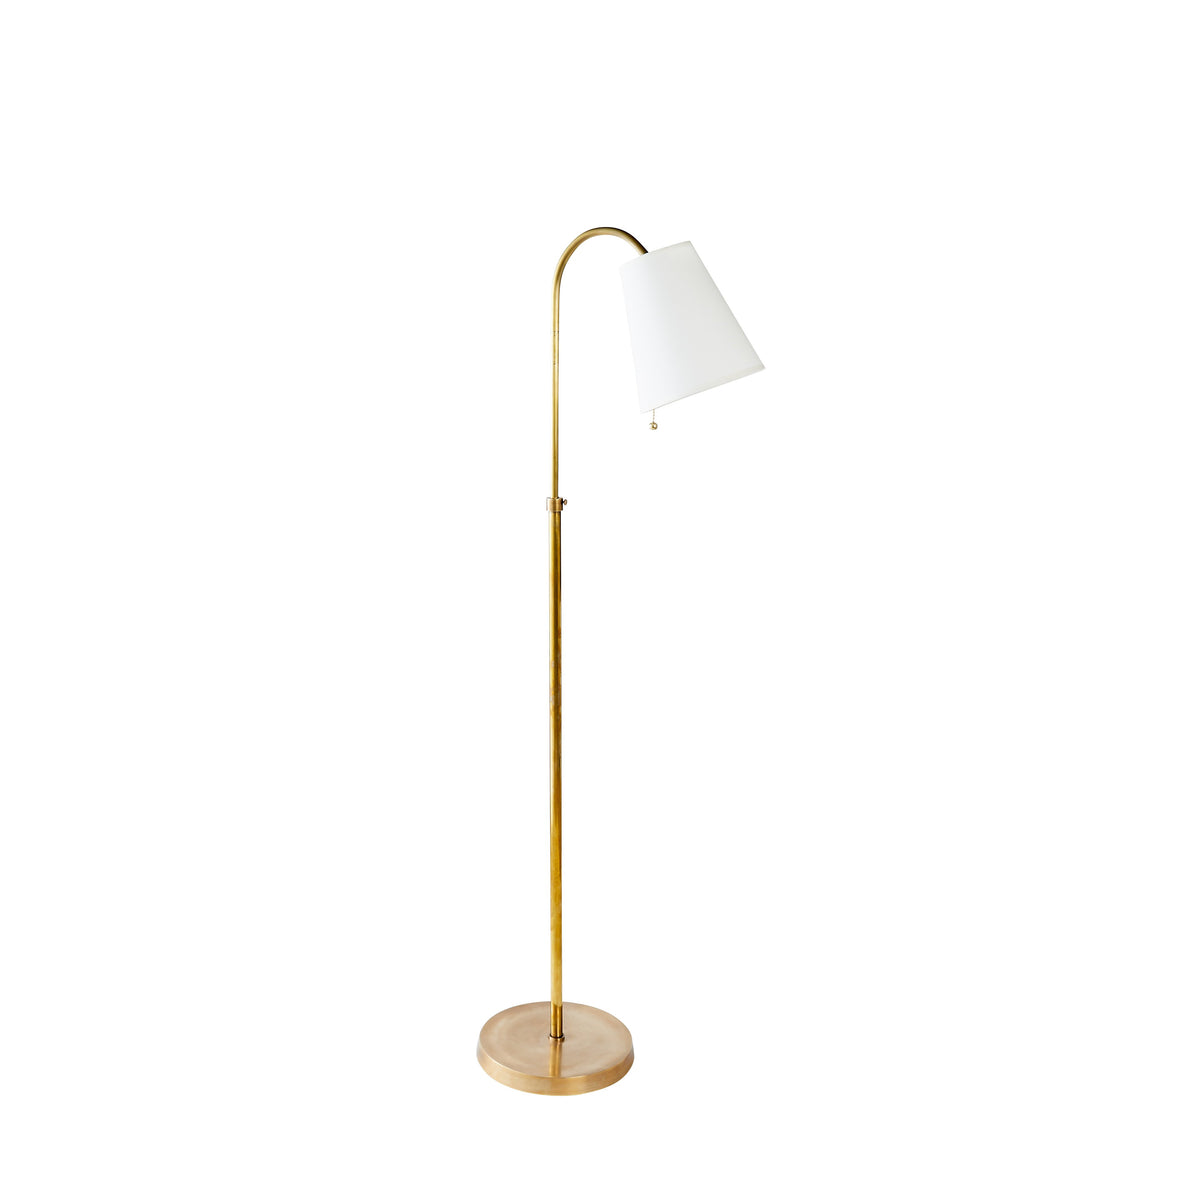 Scarlett Brass Floor Lamp with White Shade